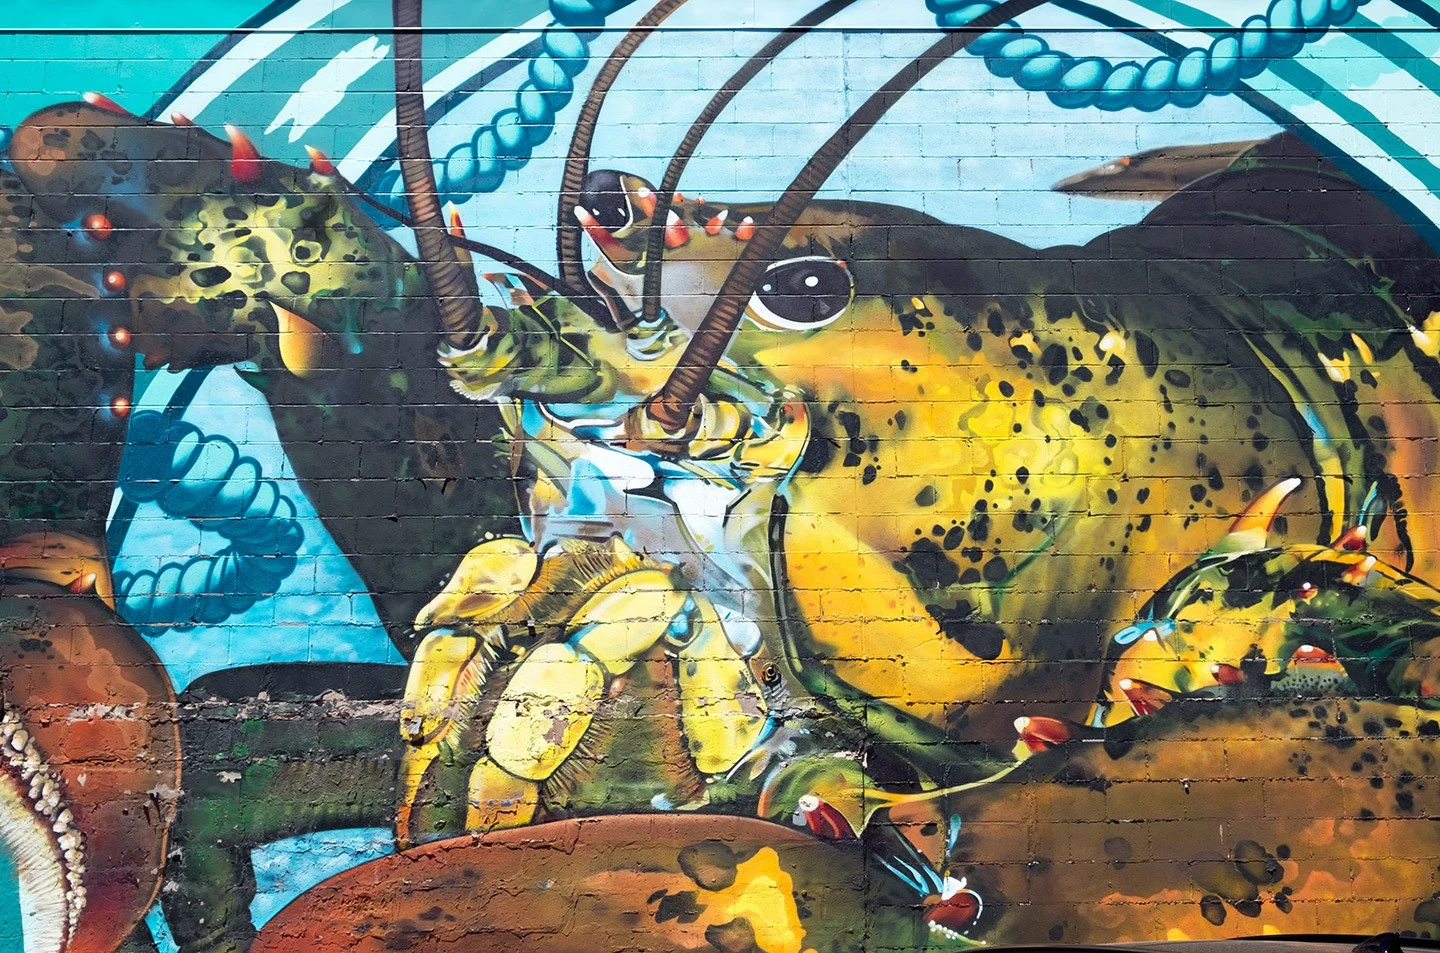 Lobster street art in Charlottetown, Prince Edward Island